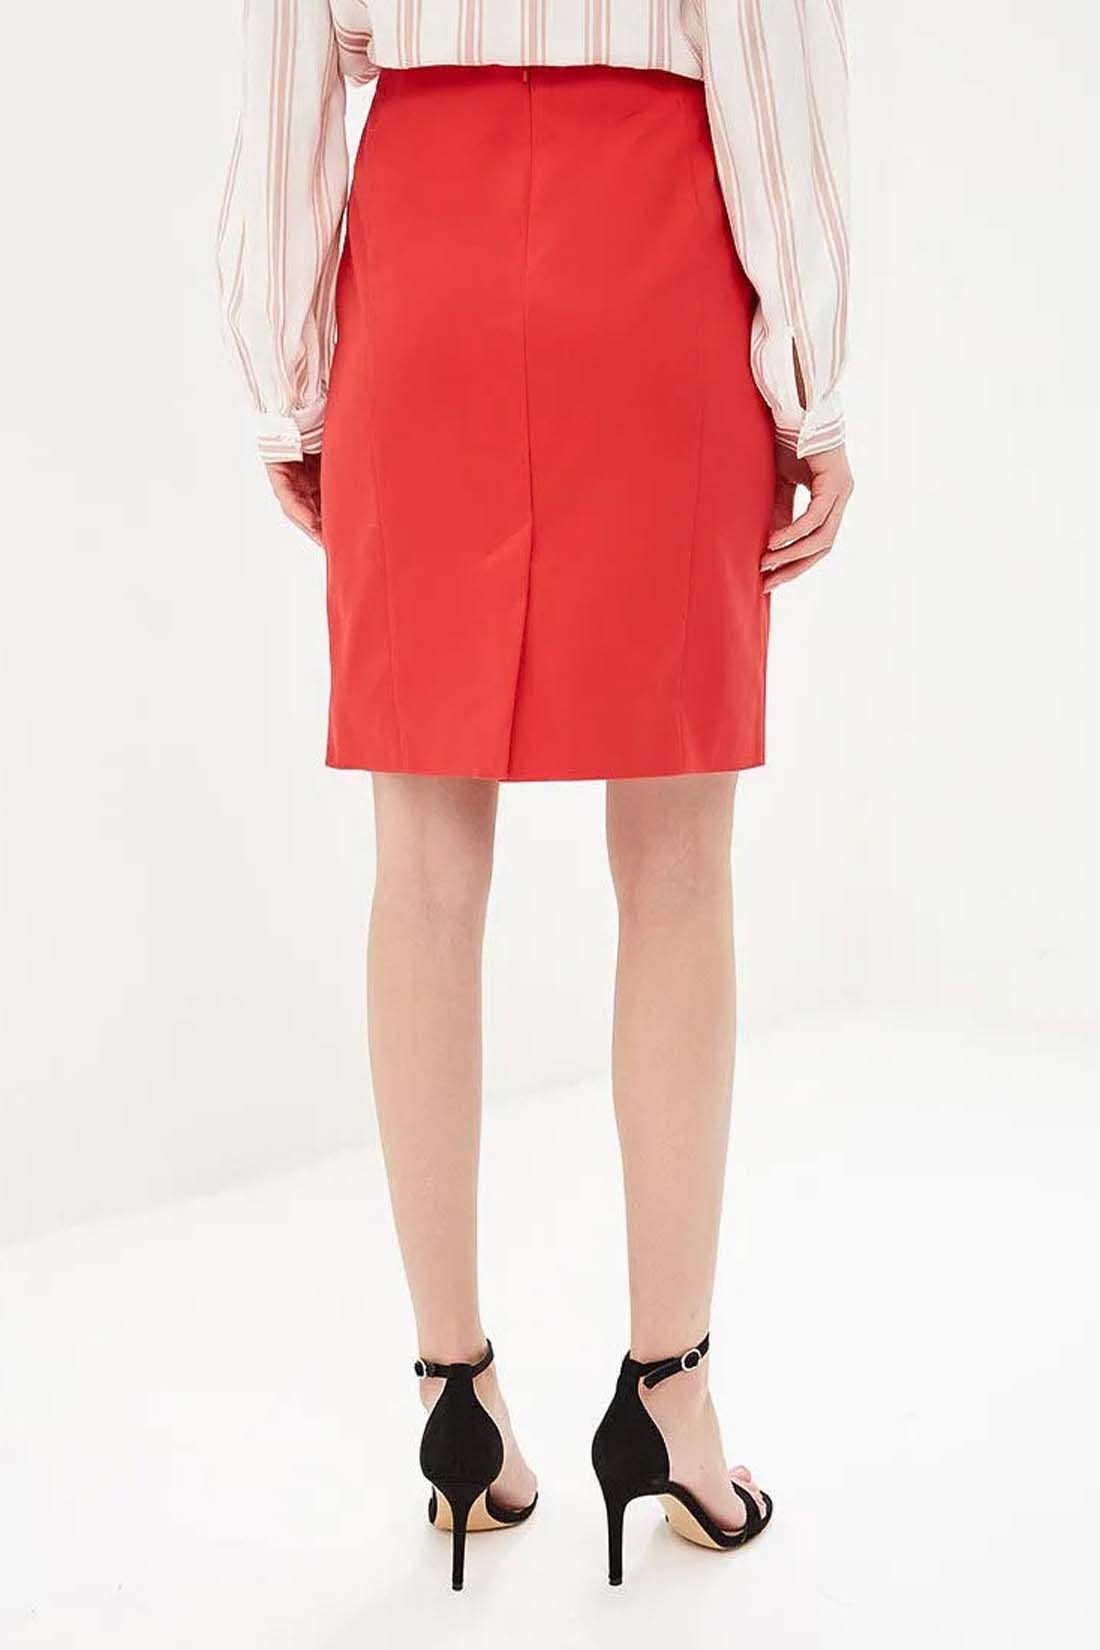 Яркая юбка-карандаш (арт. baon B479012), размер M, цвет красный Яркая юбка-карандаш (арт. baon B479012) - фото 2